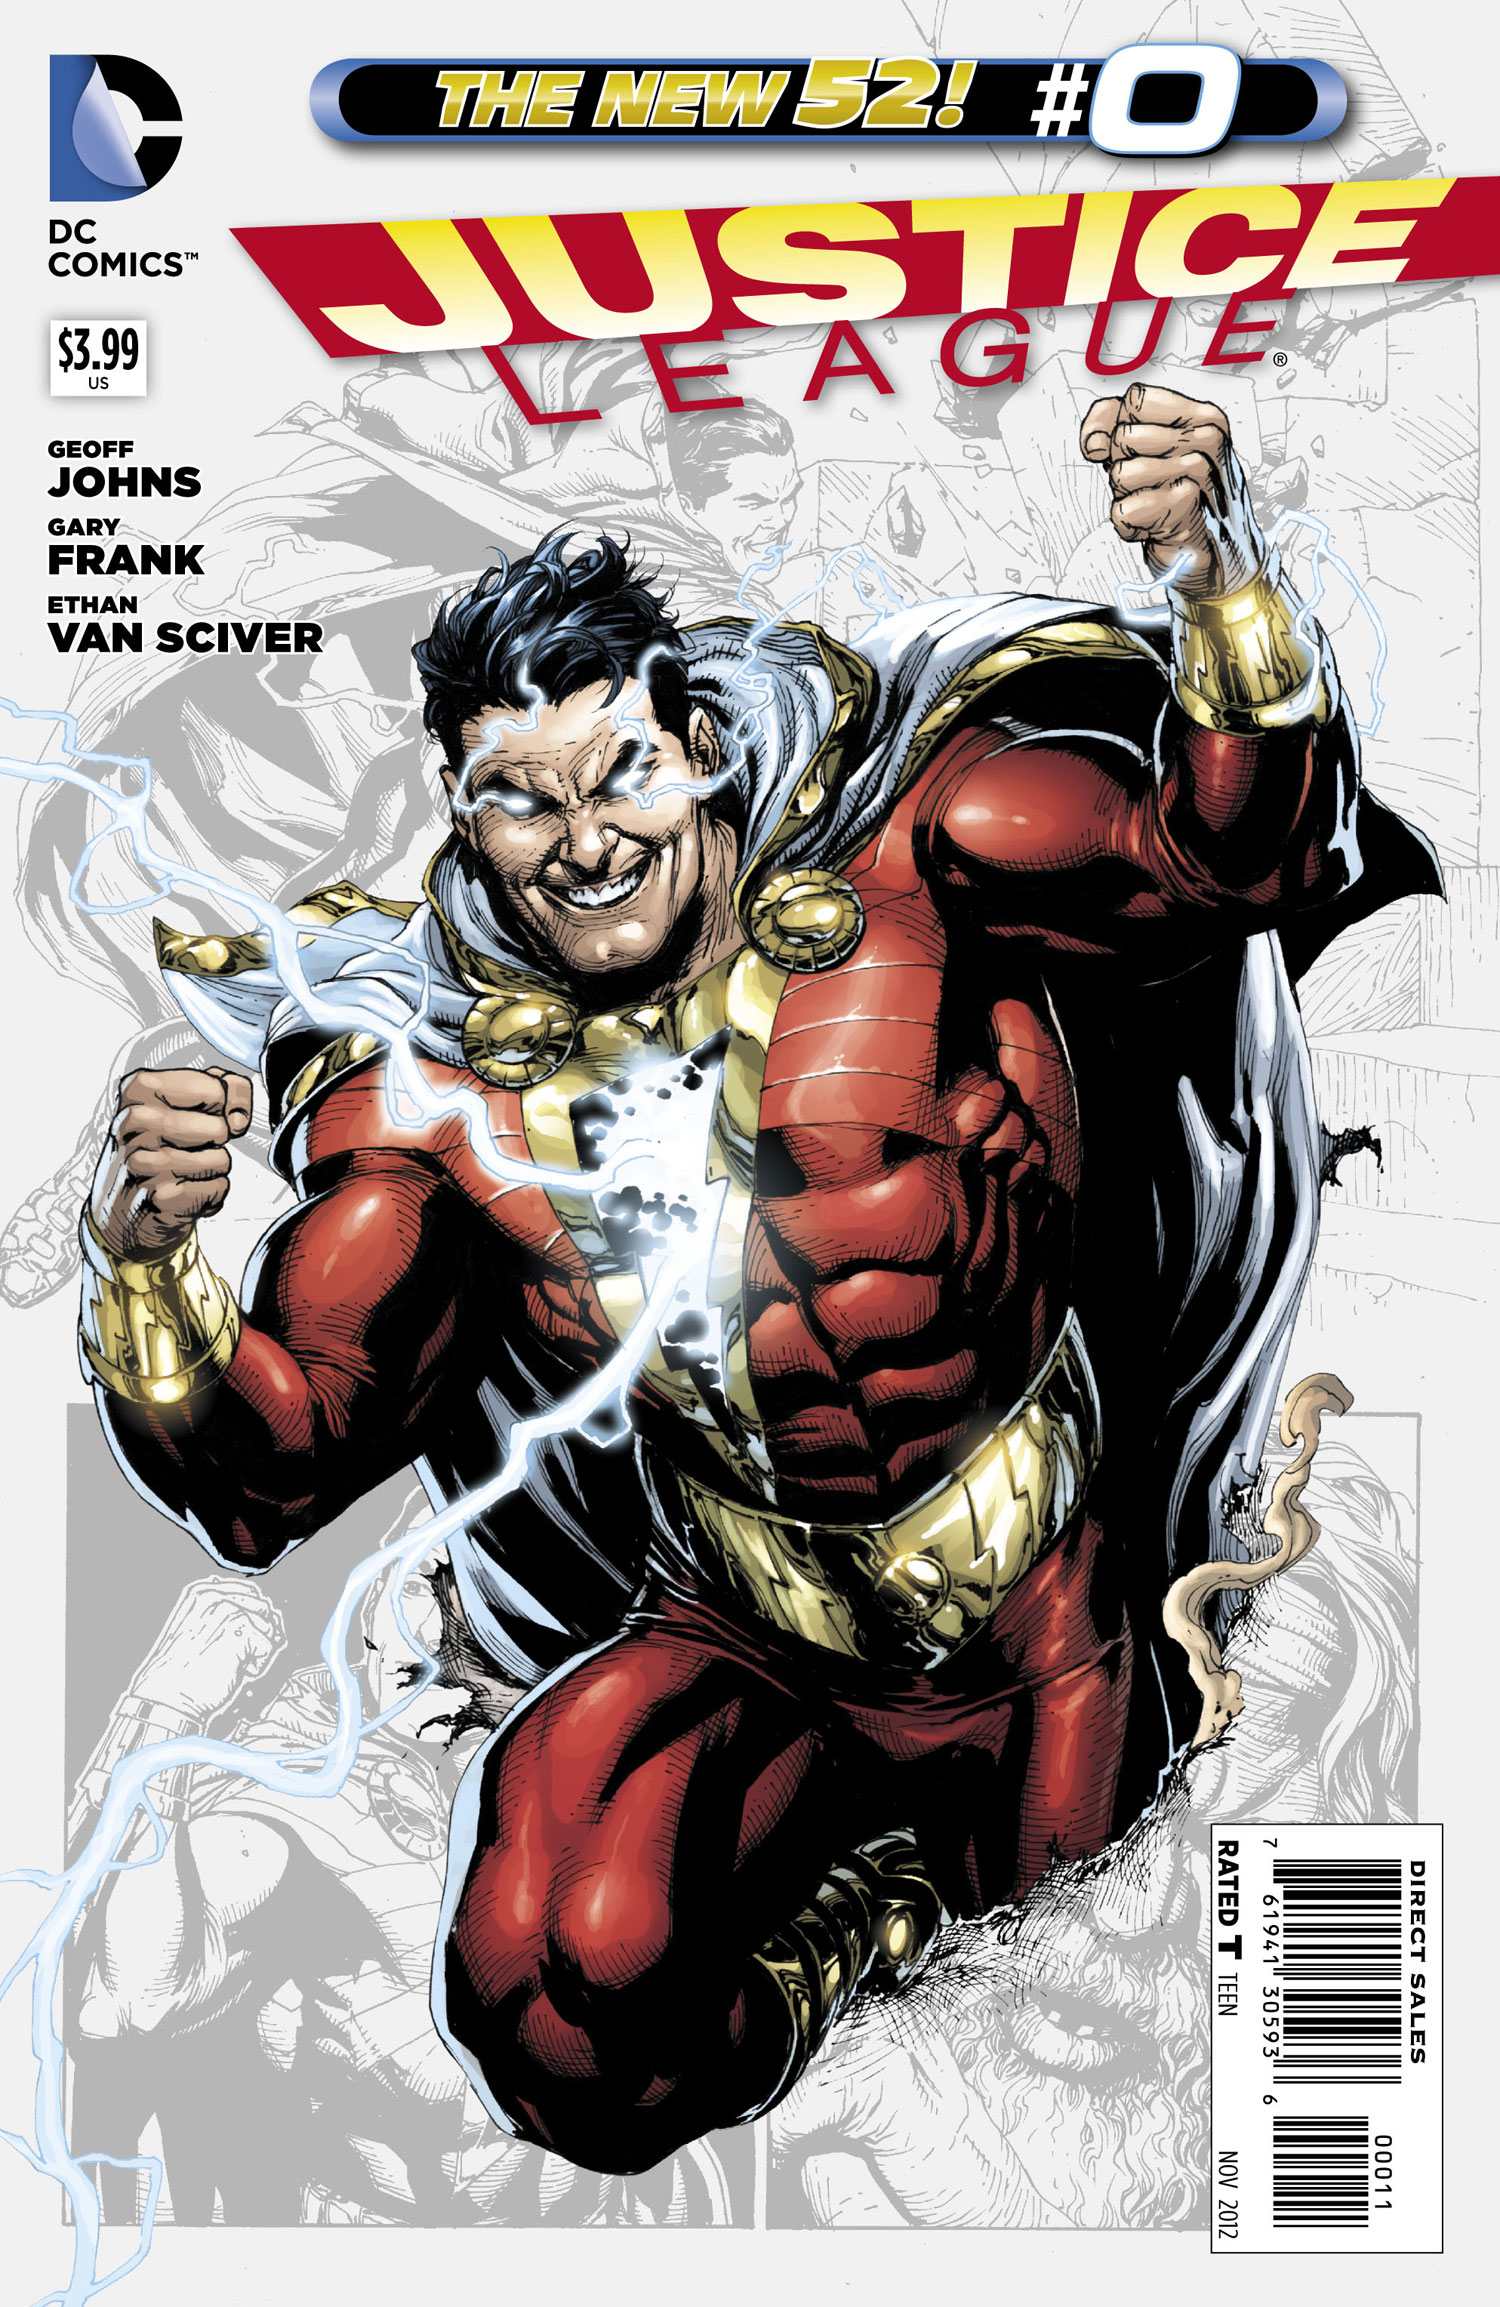 Shazam Justice League zero issue cover 